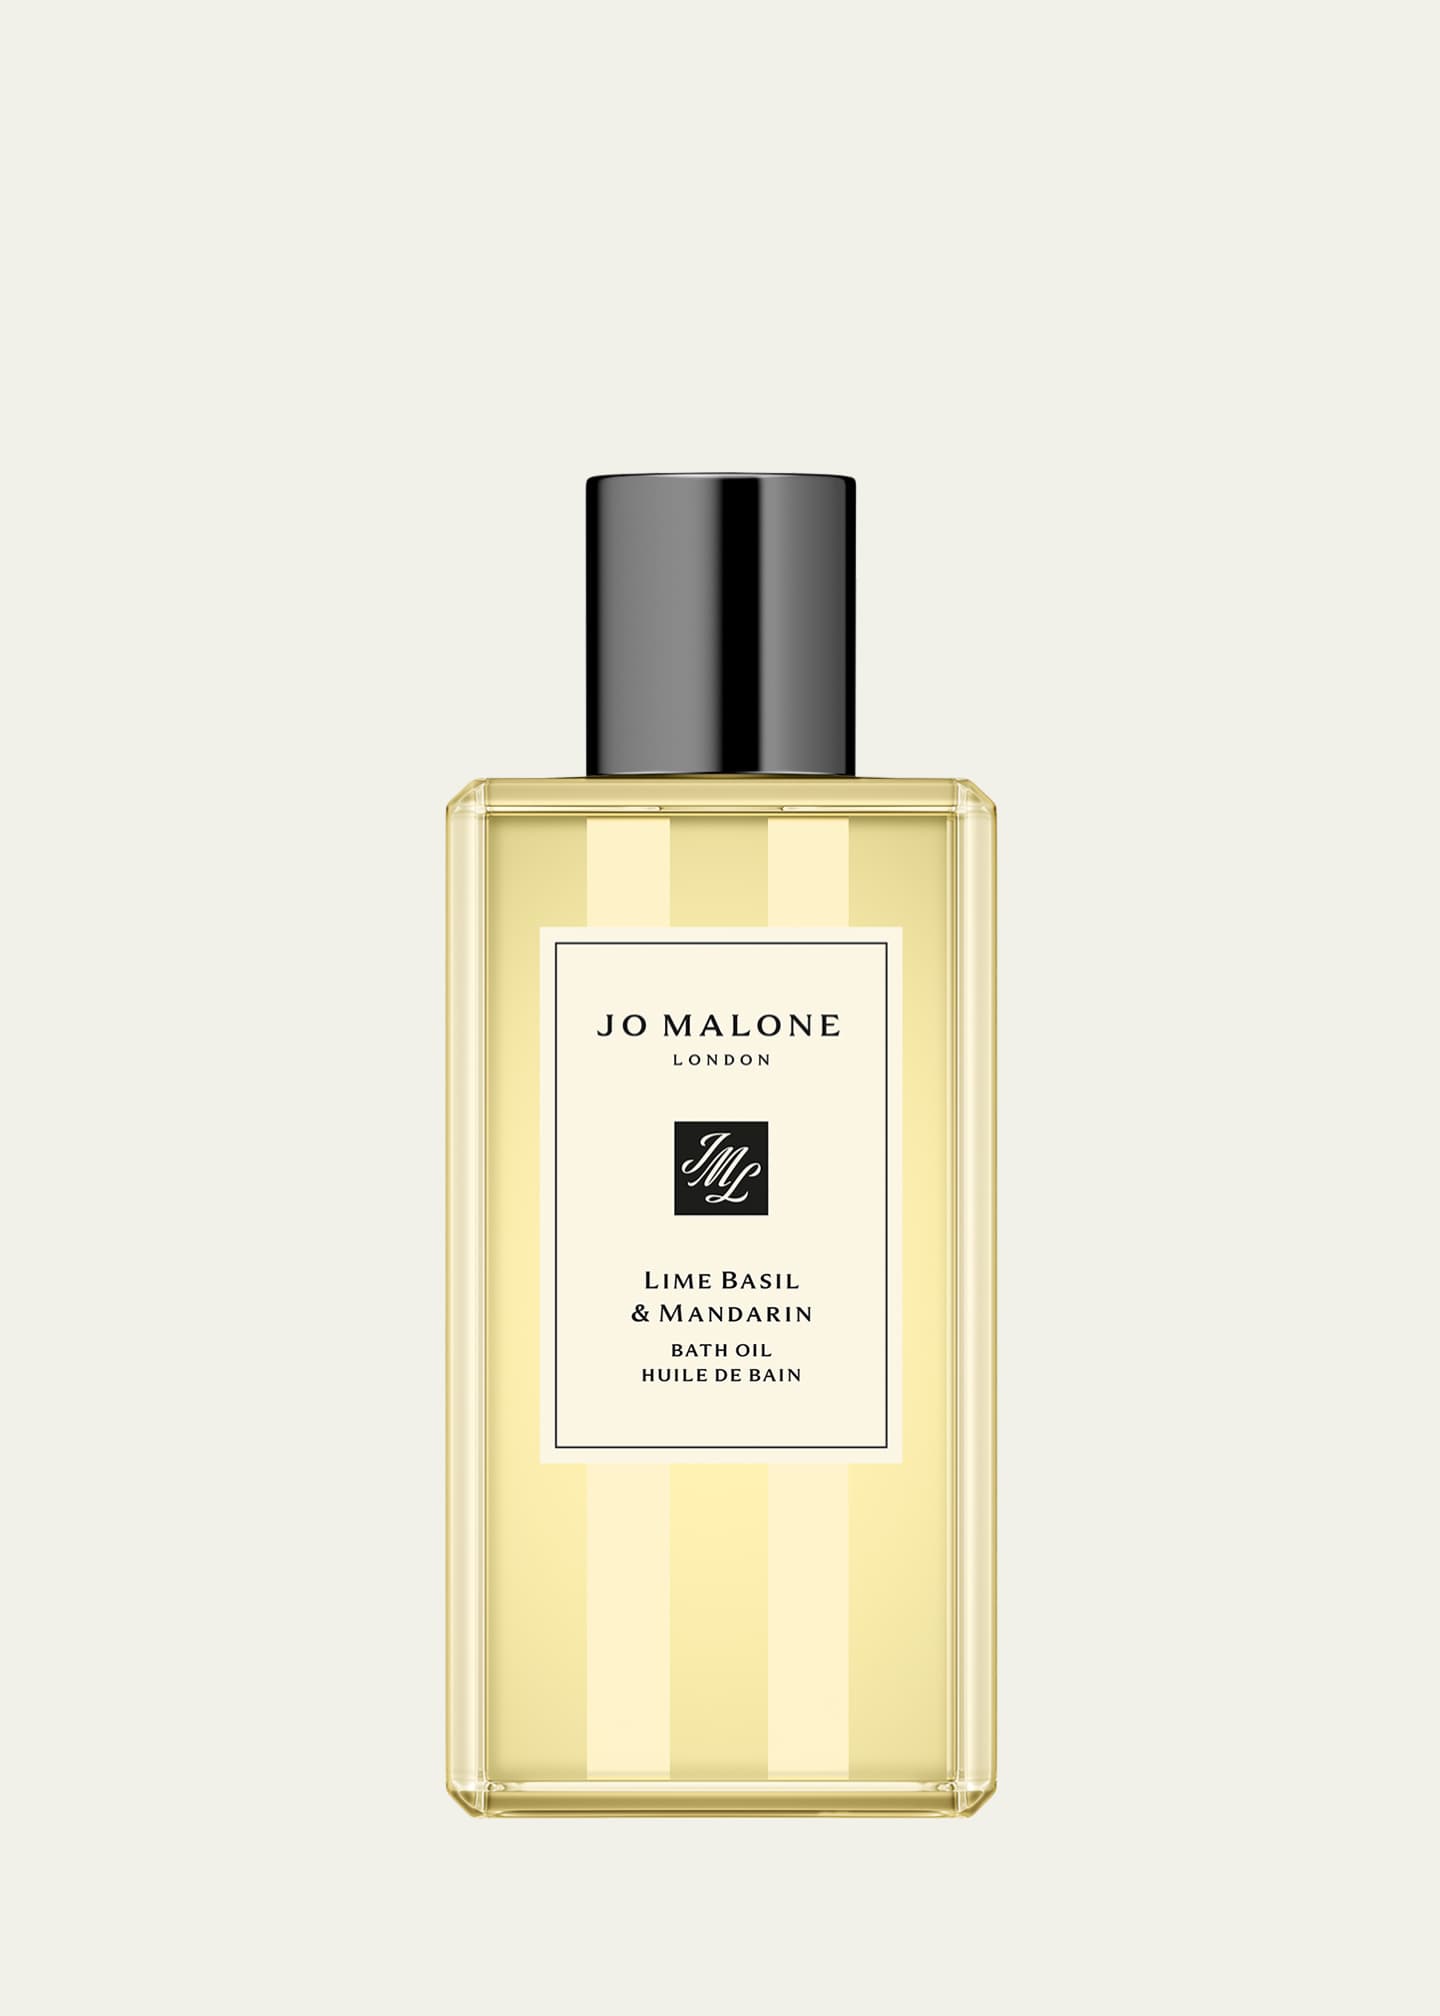 Jo Malone London 8.5 oz. Lime Basil & Mandarin Bath Oil Image 2 of 3